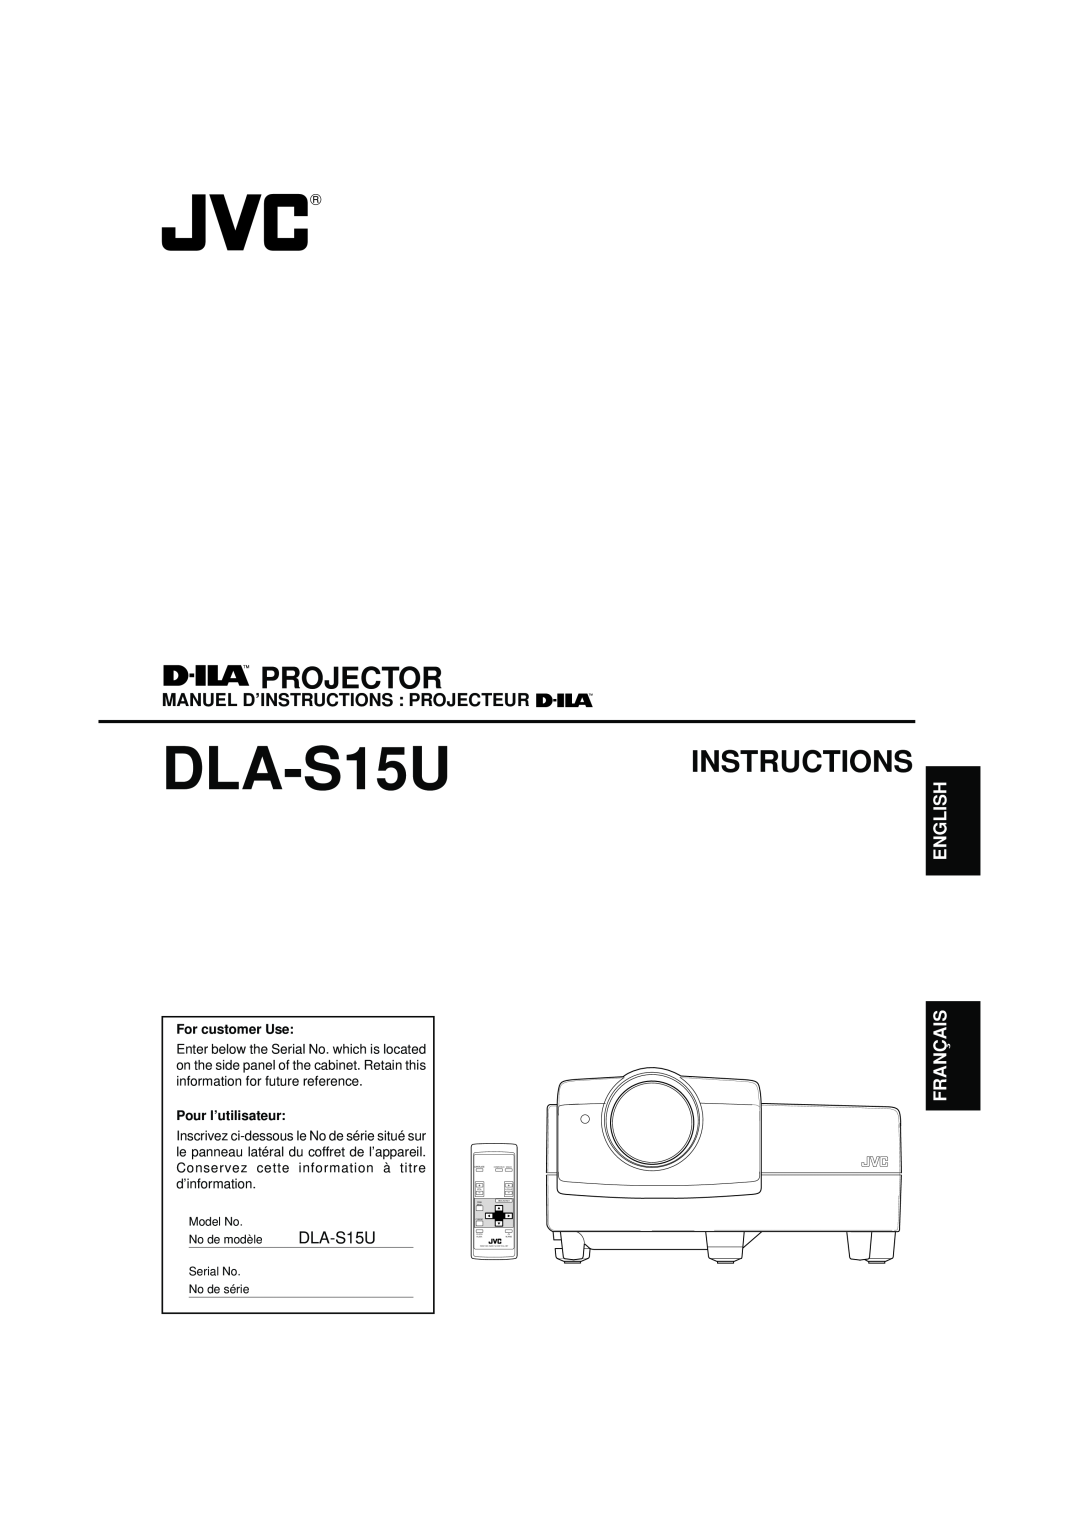 JVC DLA-S15U manual Projector, Manuel D’Instructions Projecteur, English, Français, For customer Use, Operate, Focus 